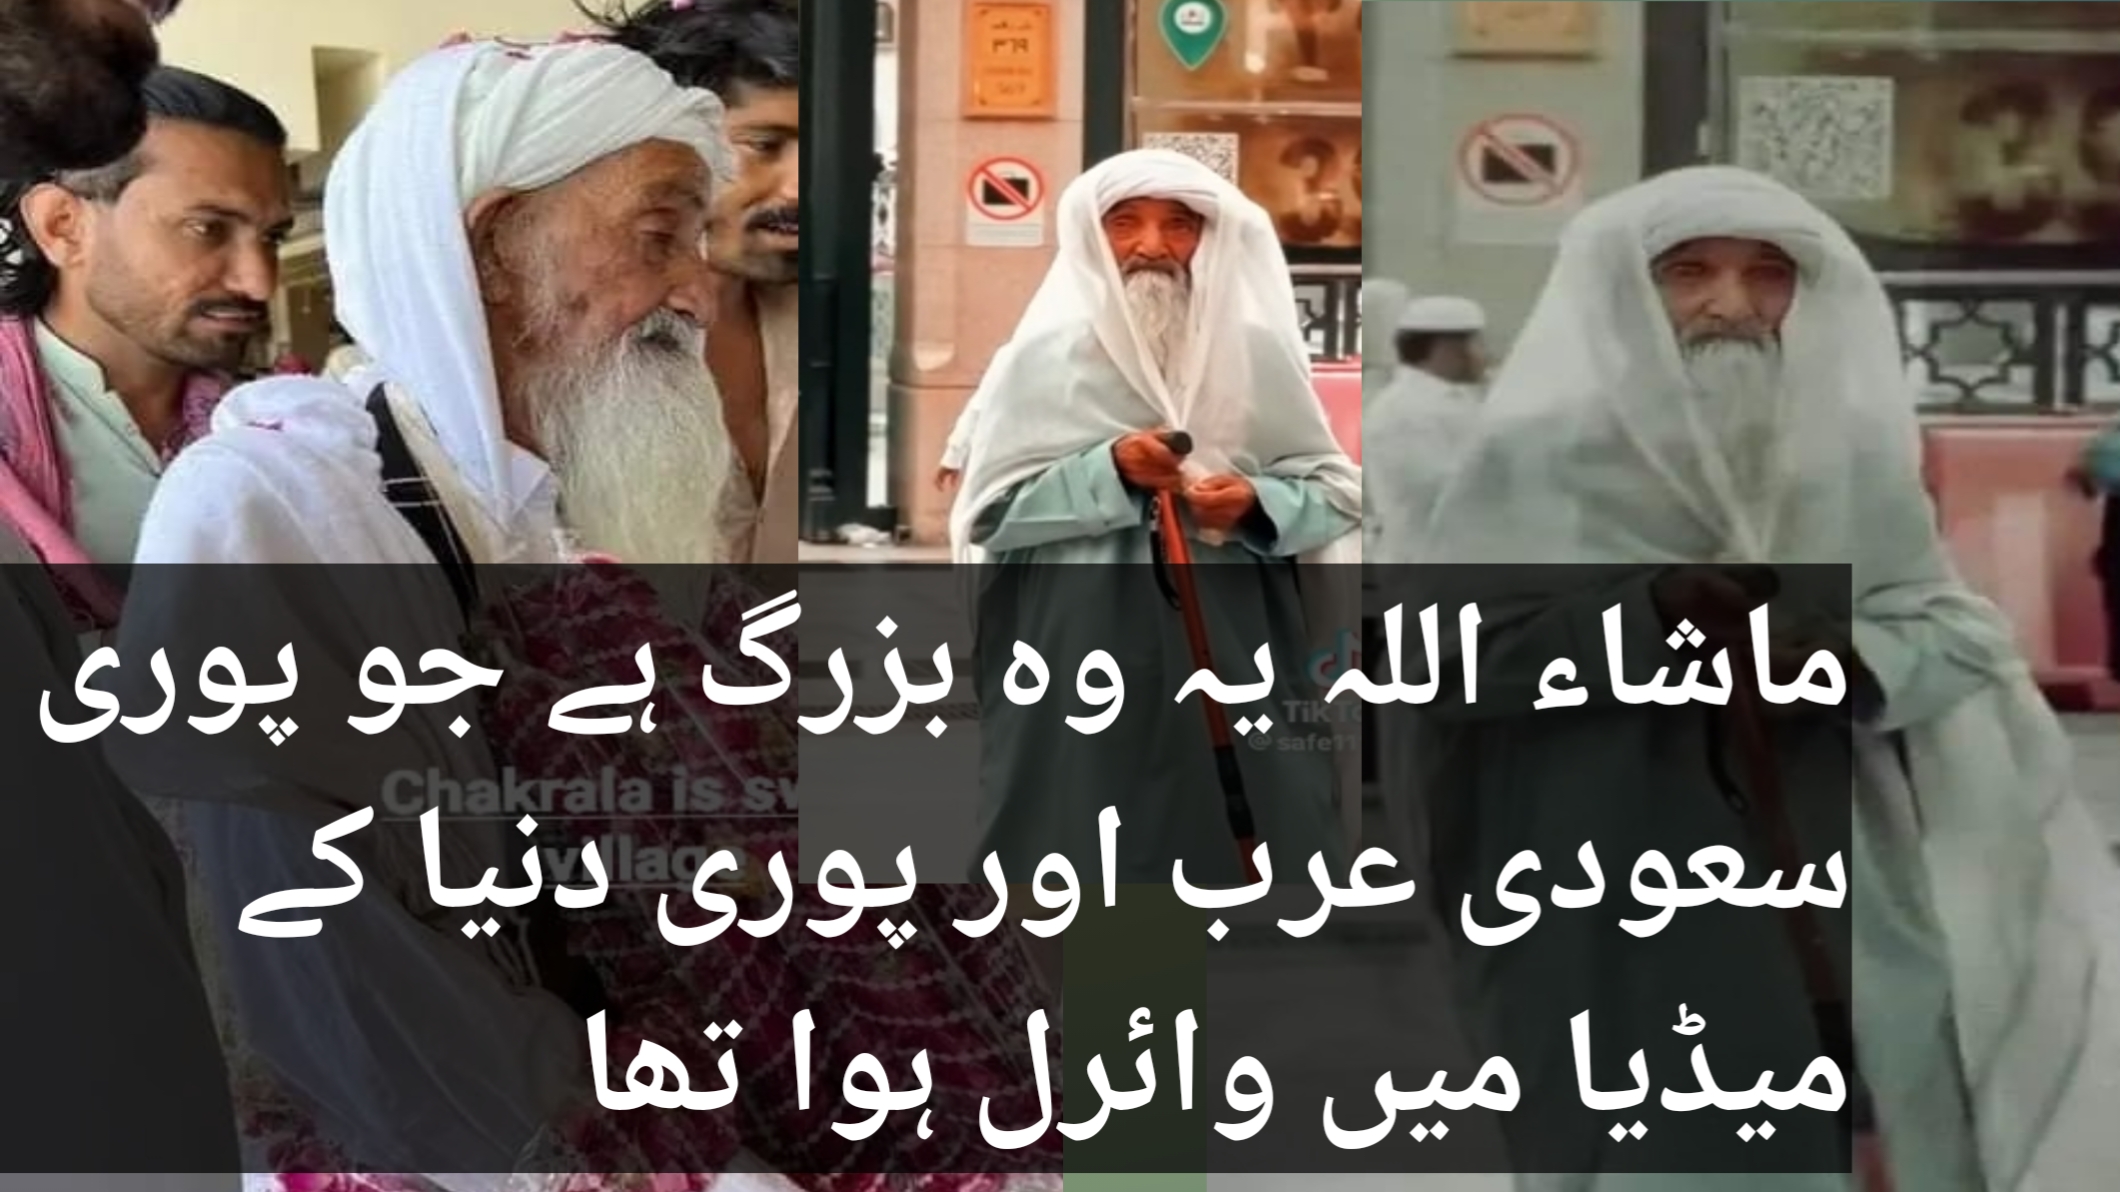 Old man video going viral on Madina Arab social Media